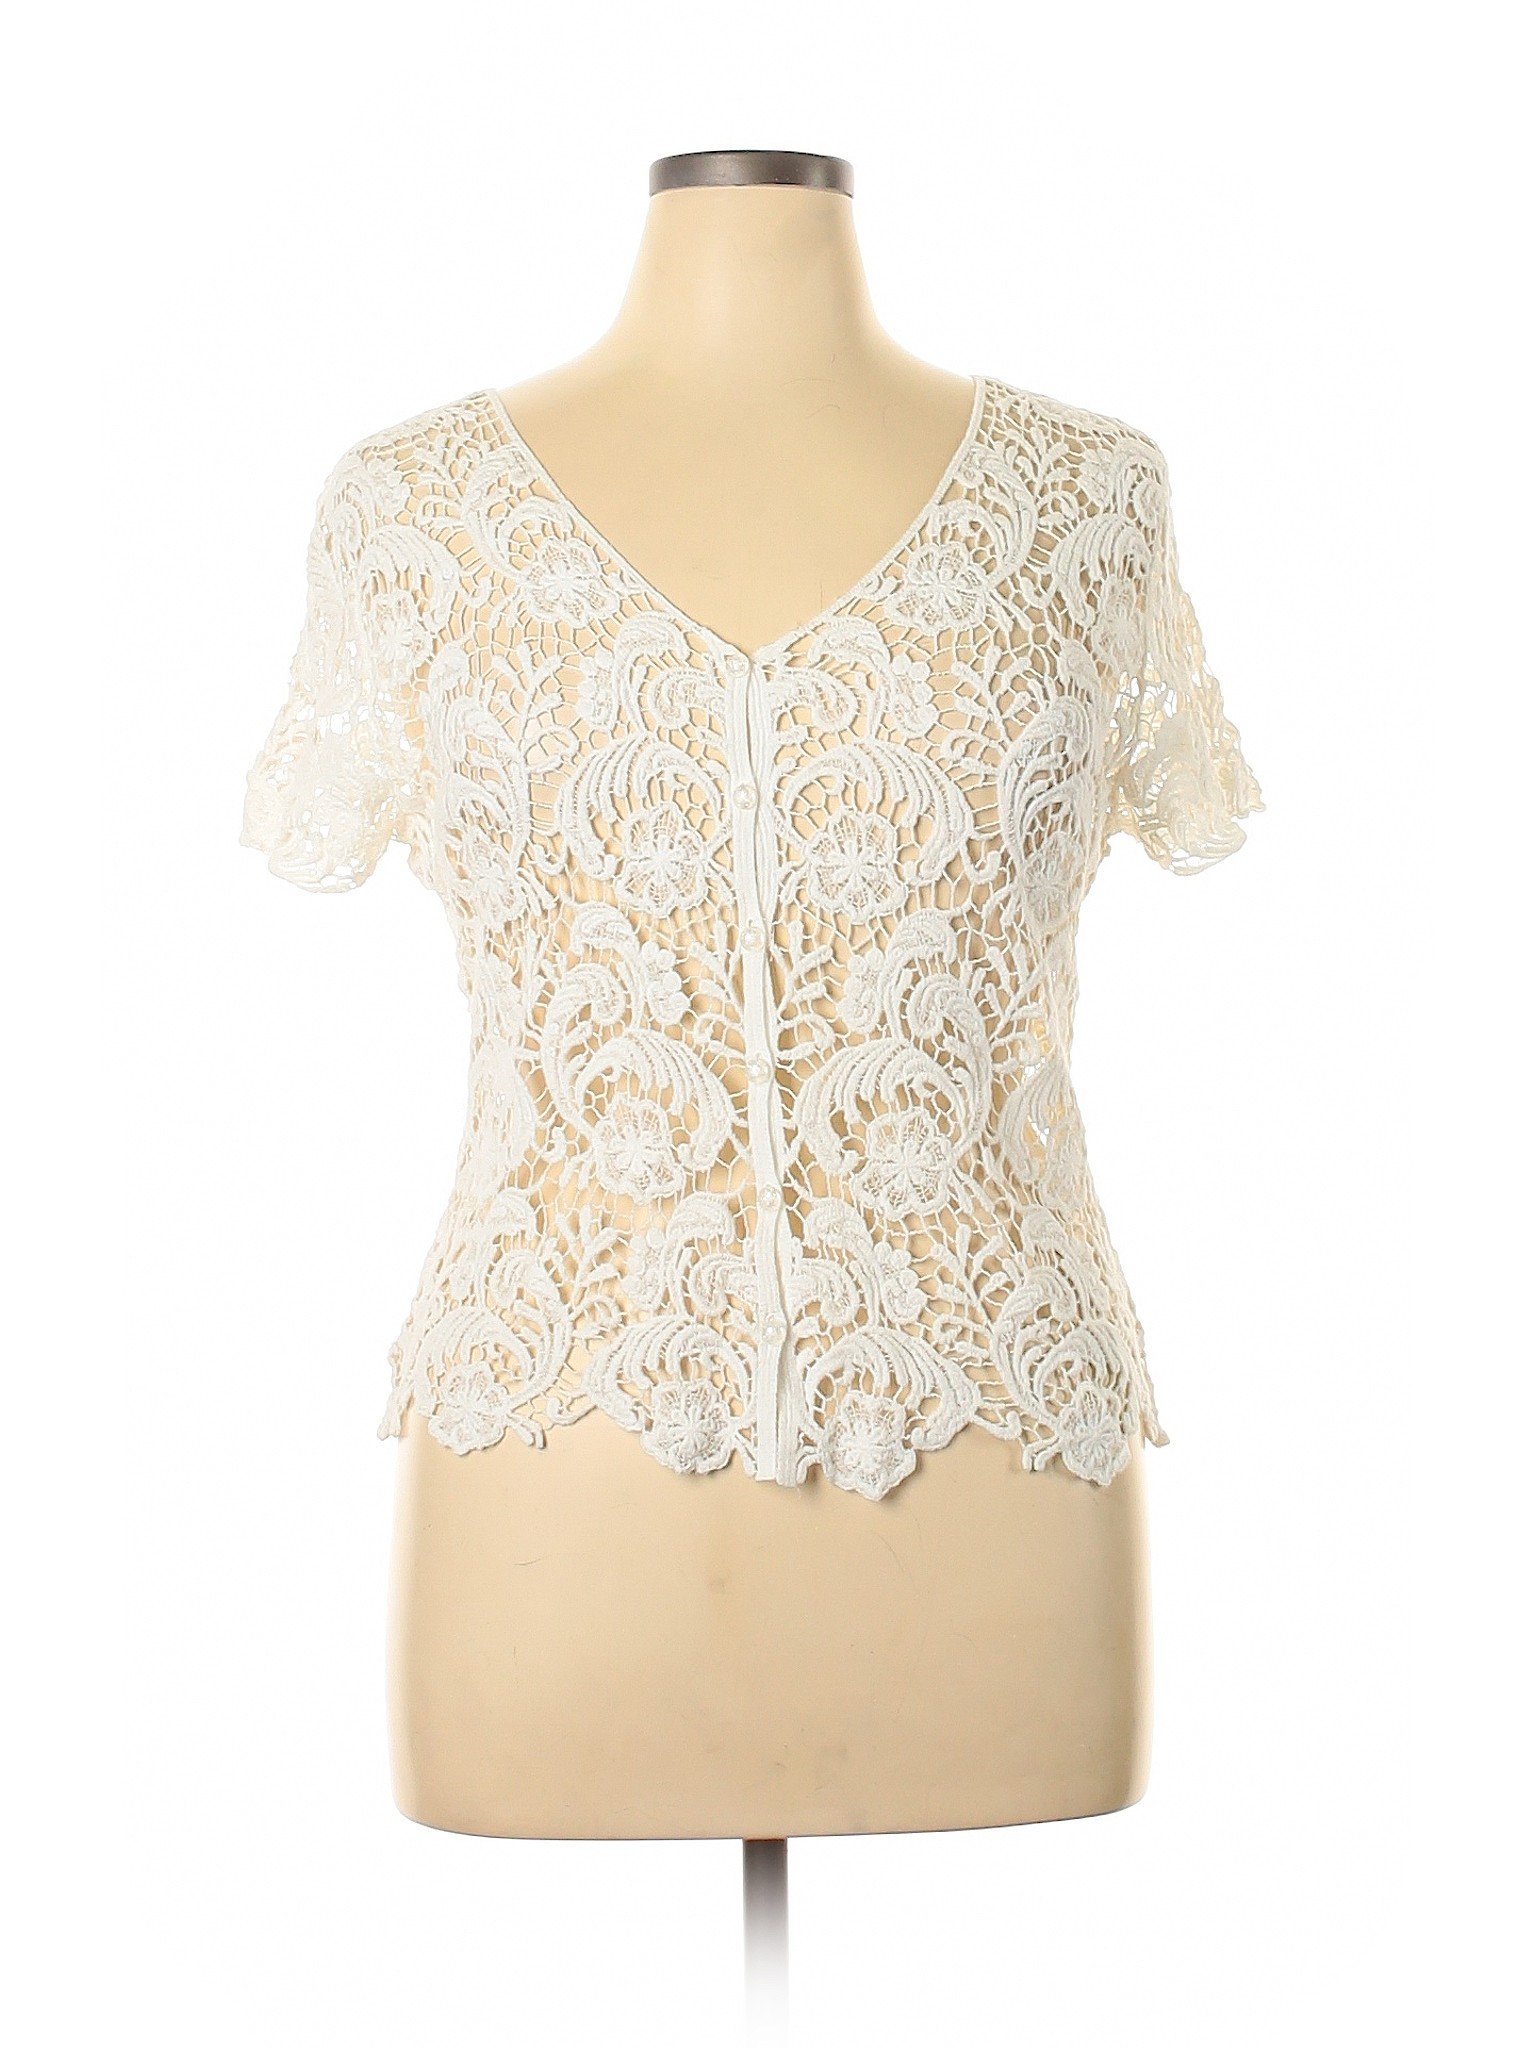 NWT Say What? Women White Short Sleeve Blouse XL | eBay